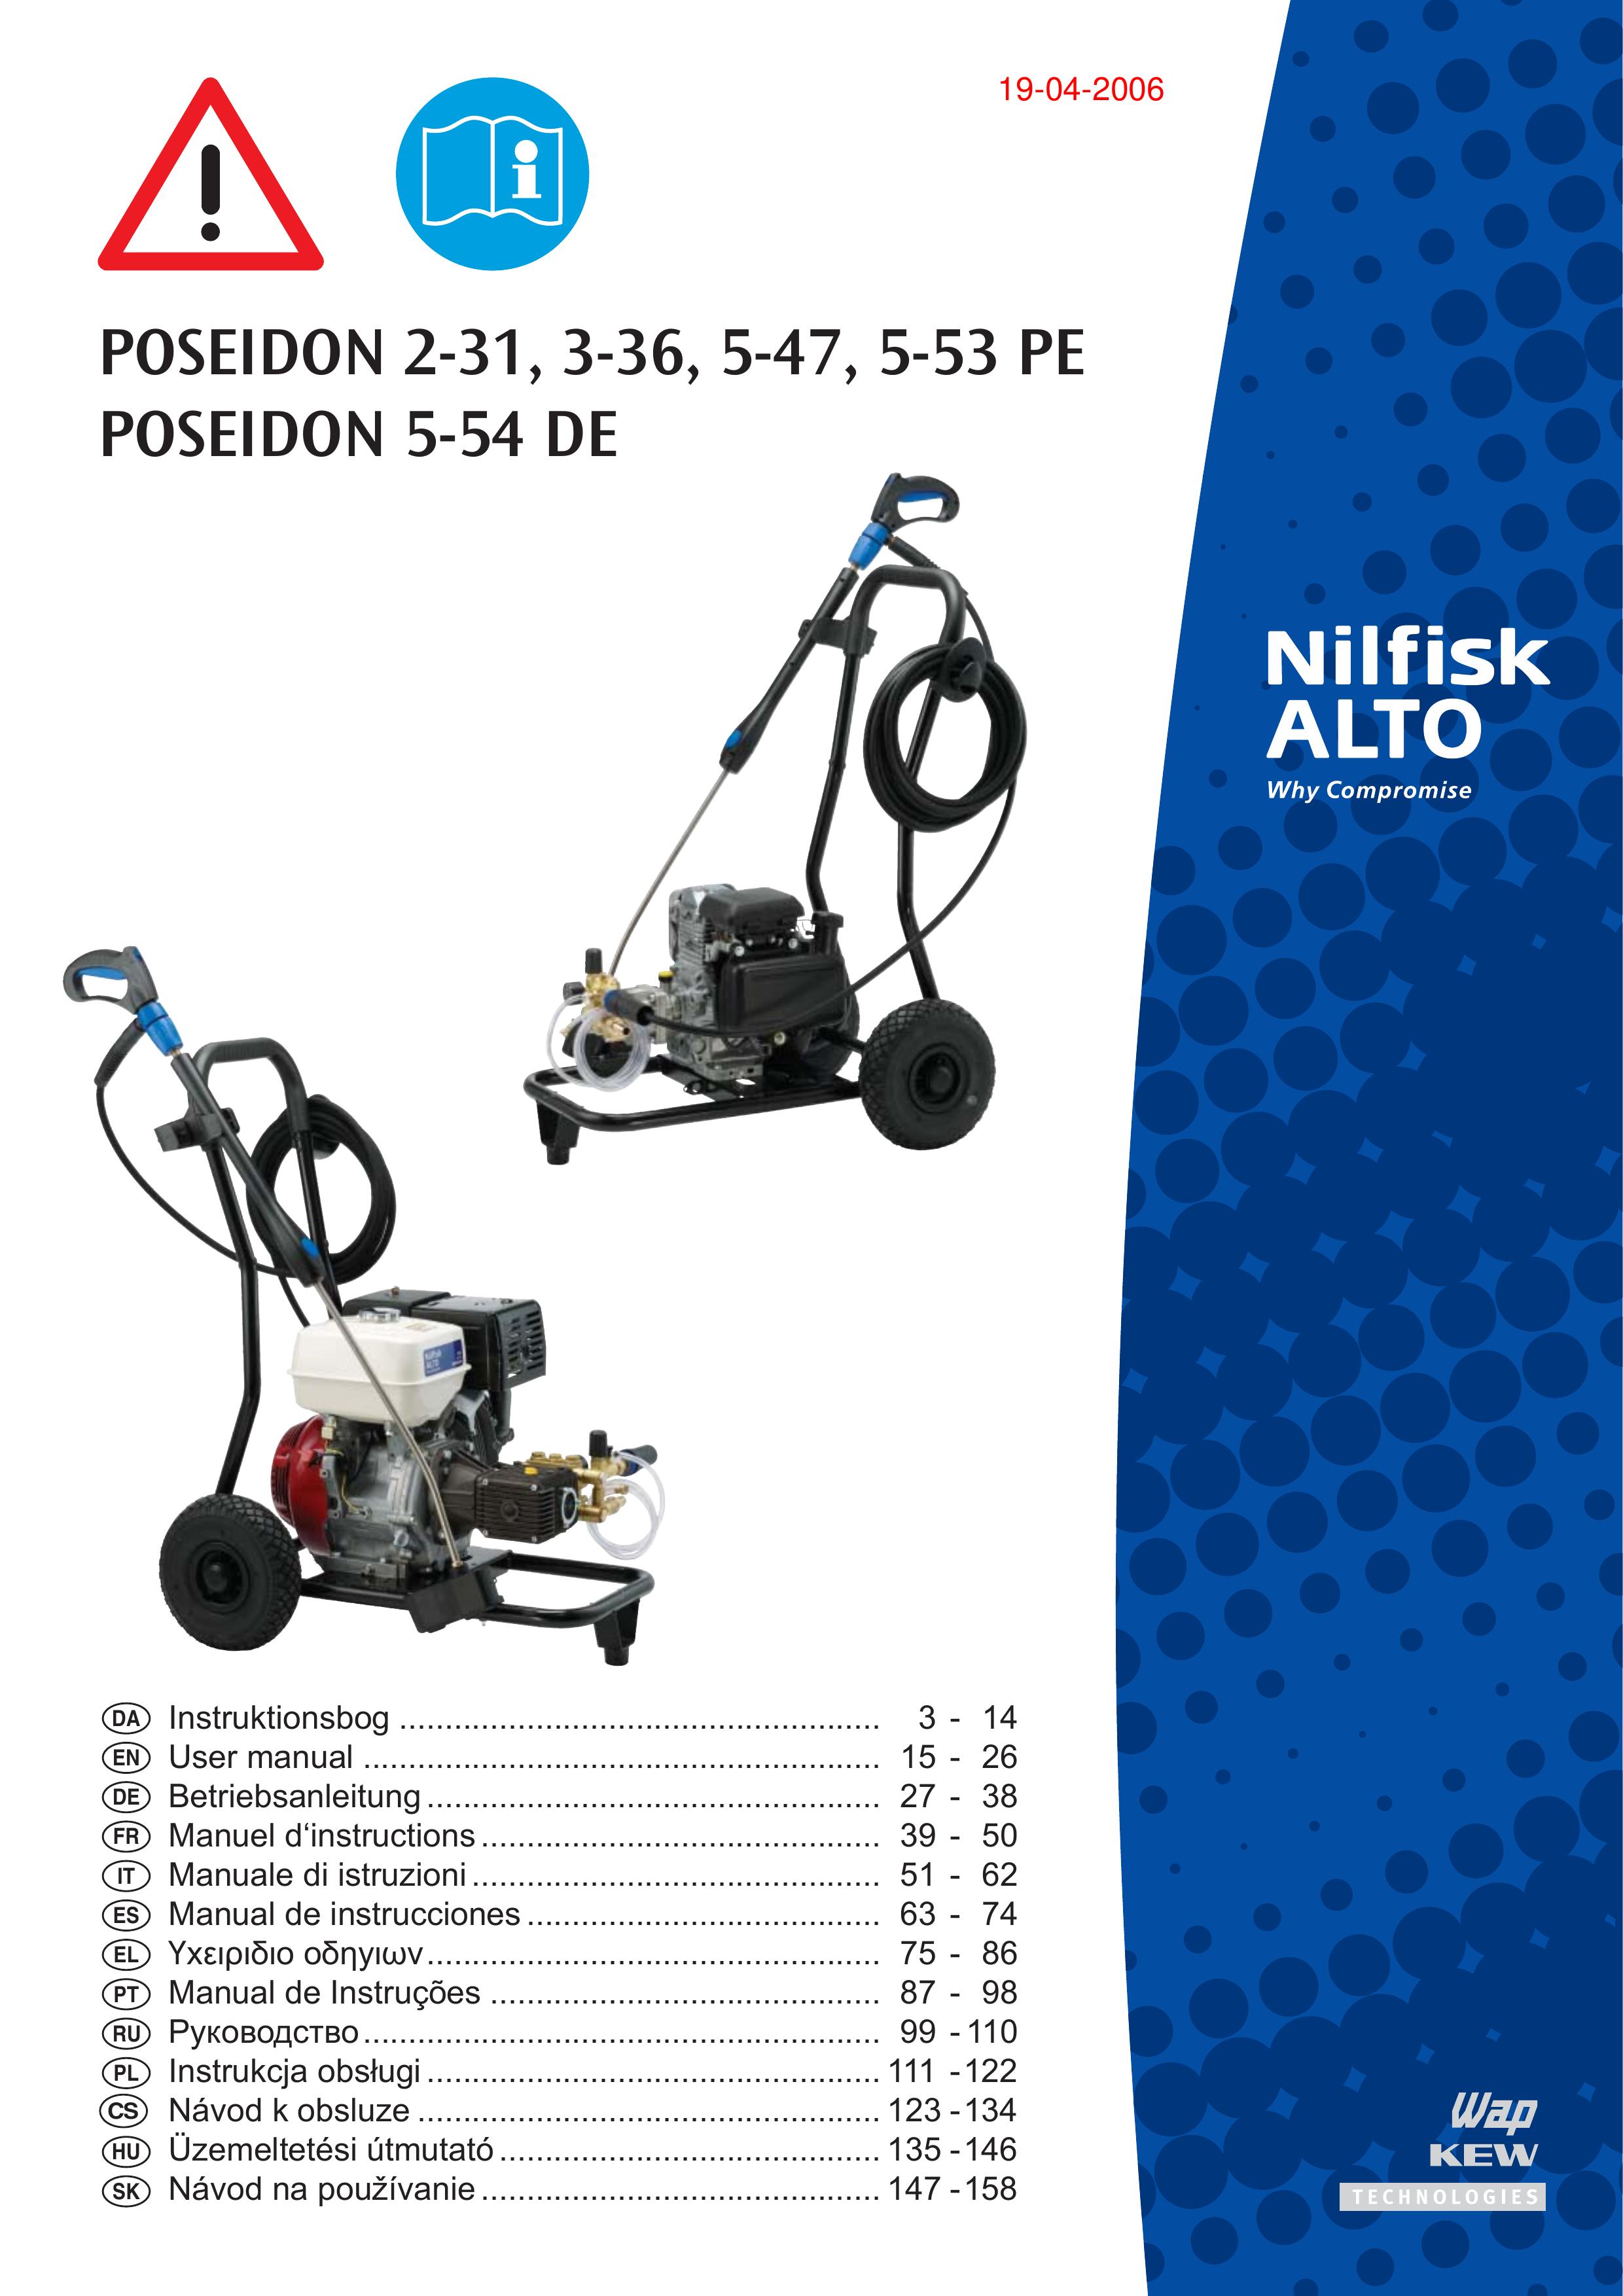 Nilfisk-ALTO POSEIDON 2-31 Washer User Manual